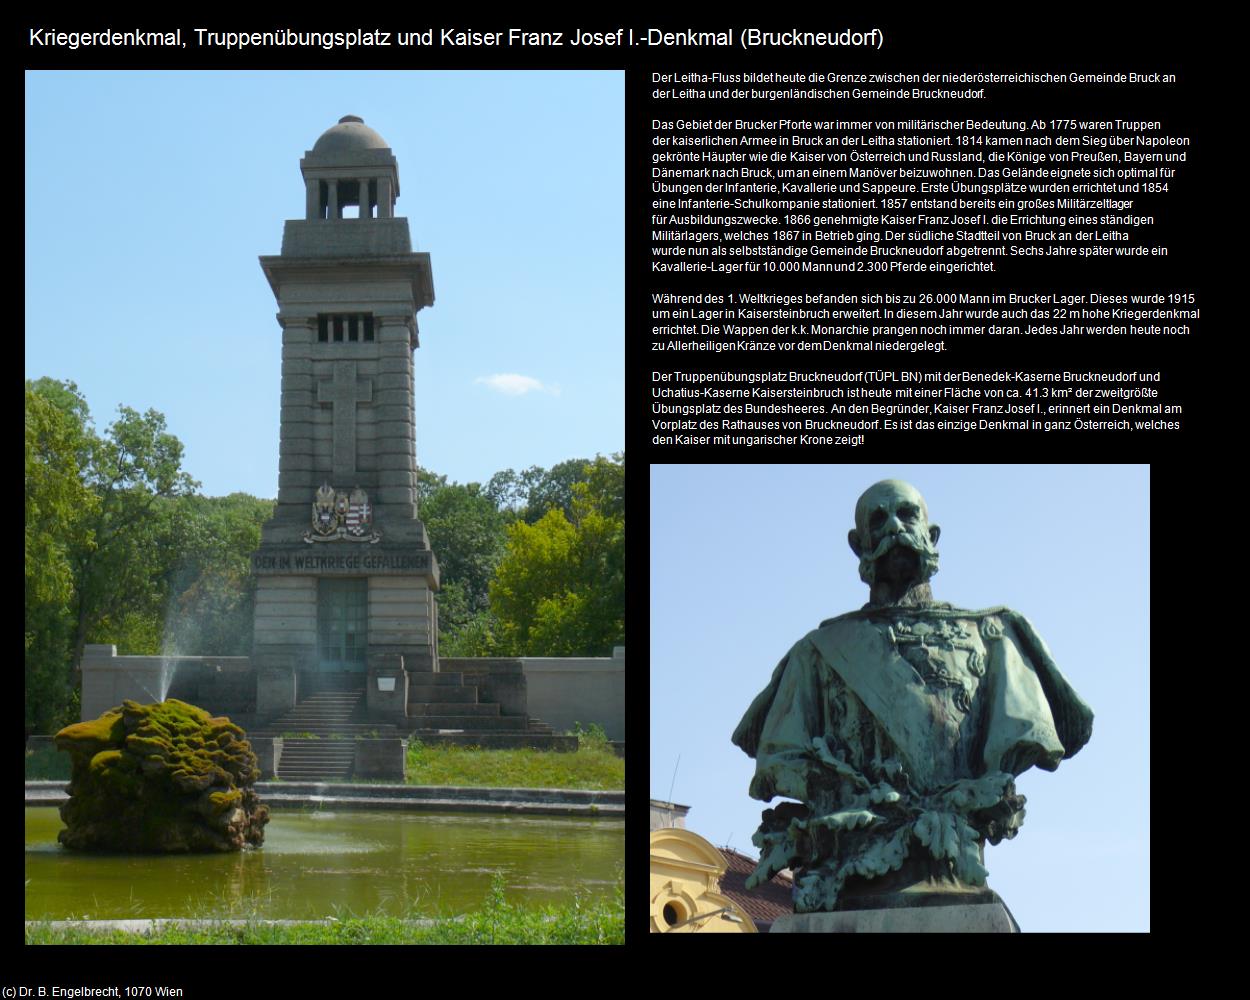 Kriegerdenkmal und Truppenübungsplatz (Bruckneudorf) in Kulturatlas-BURGENLAND